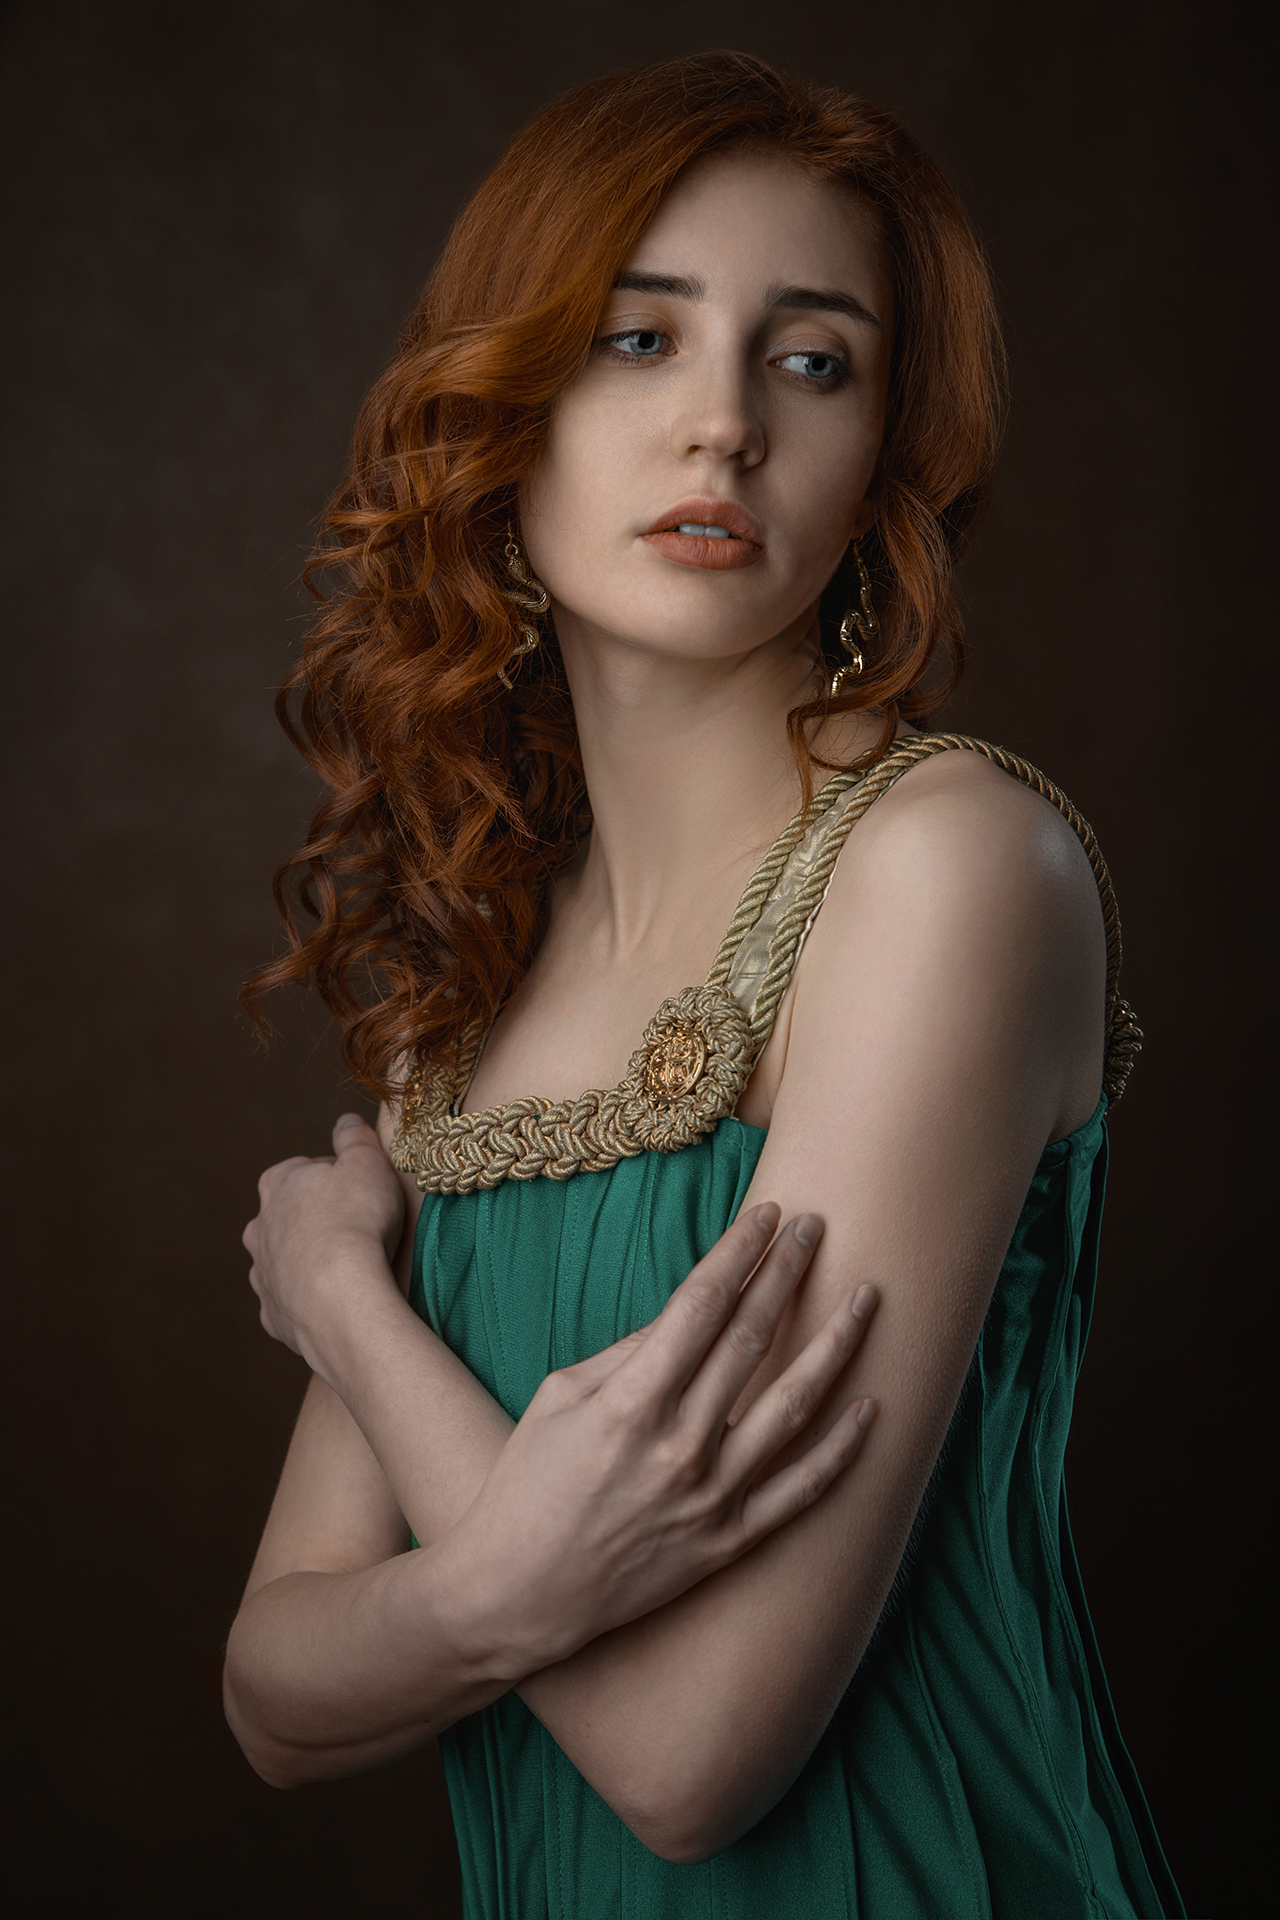 Evgeny Kozlov Women Redhead Long Hair Wavy Hair Green Clothing Dress Frown Looking Away Simple Backg 1280x1920